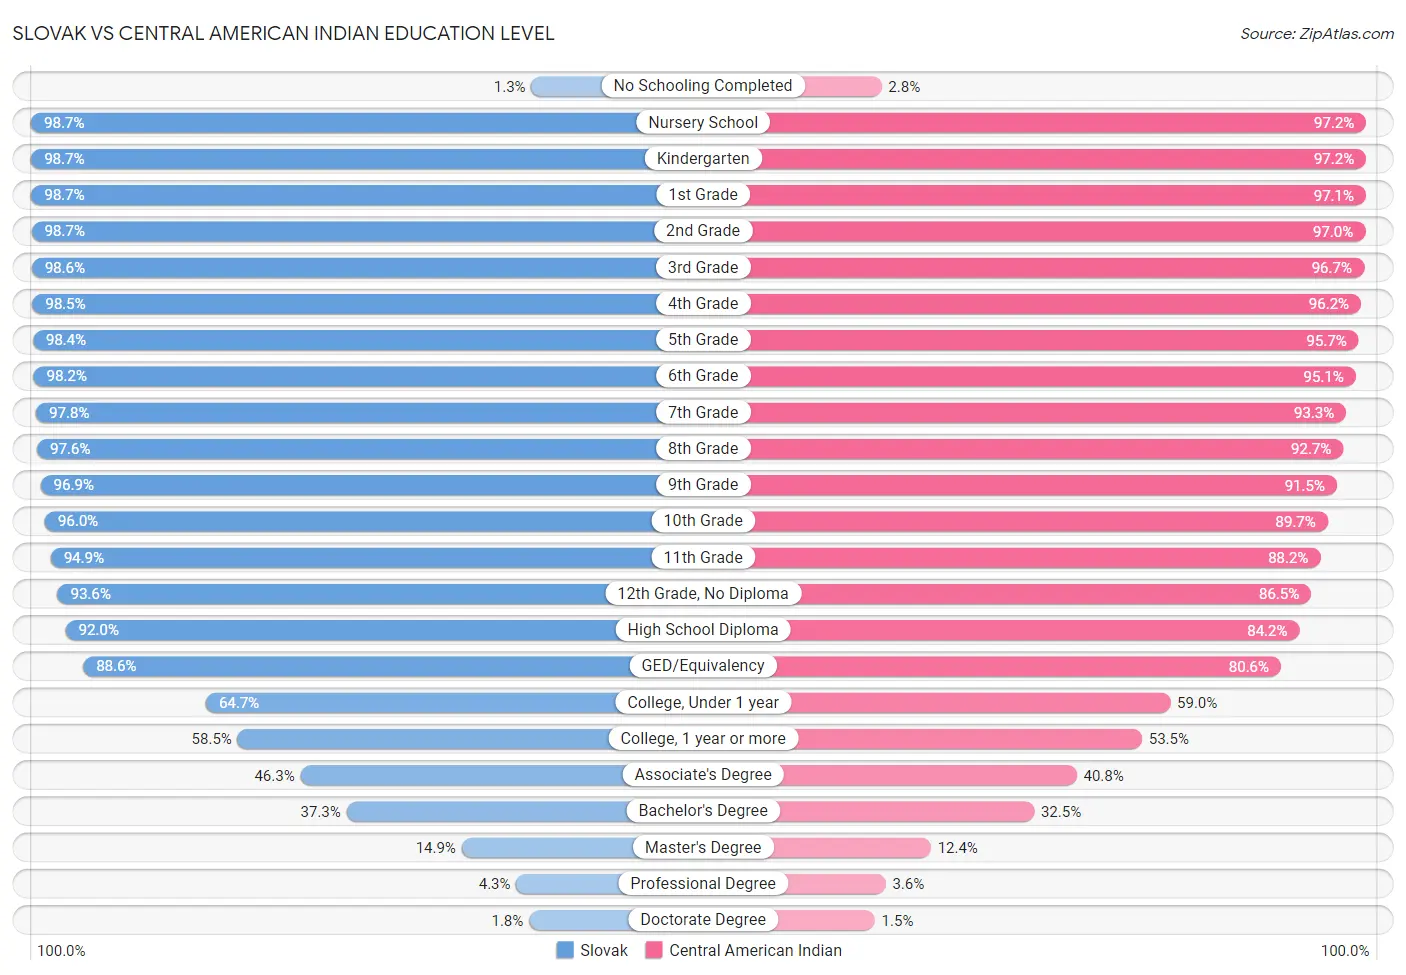 Slovak vs Central American Indian Education Level